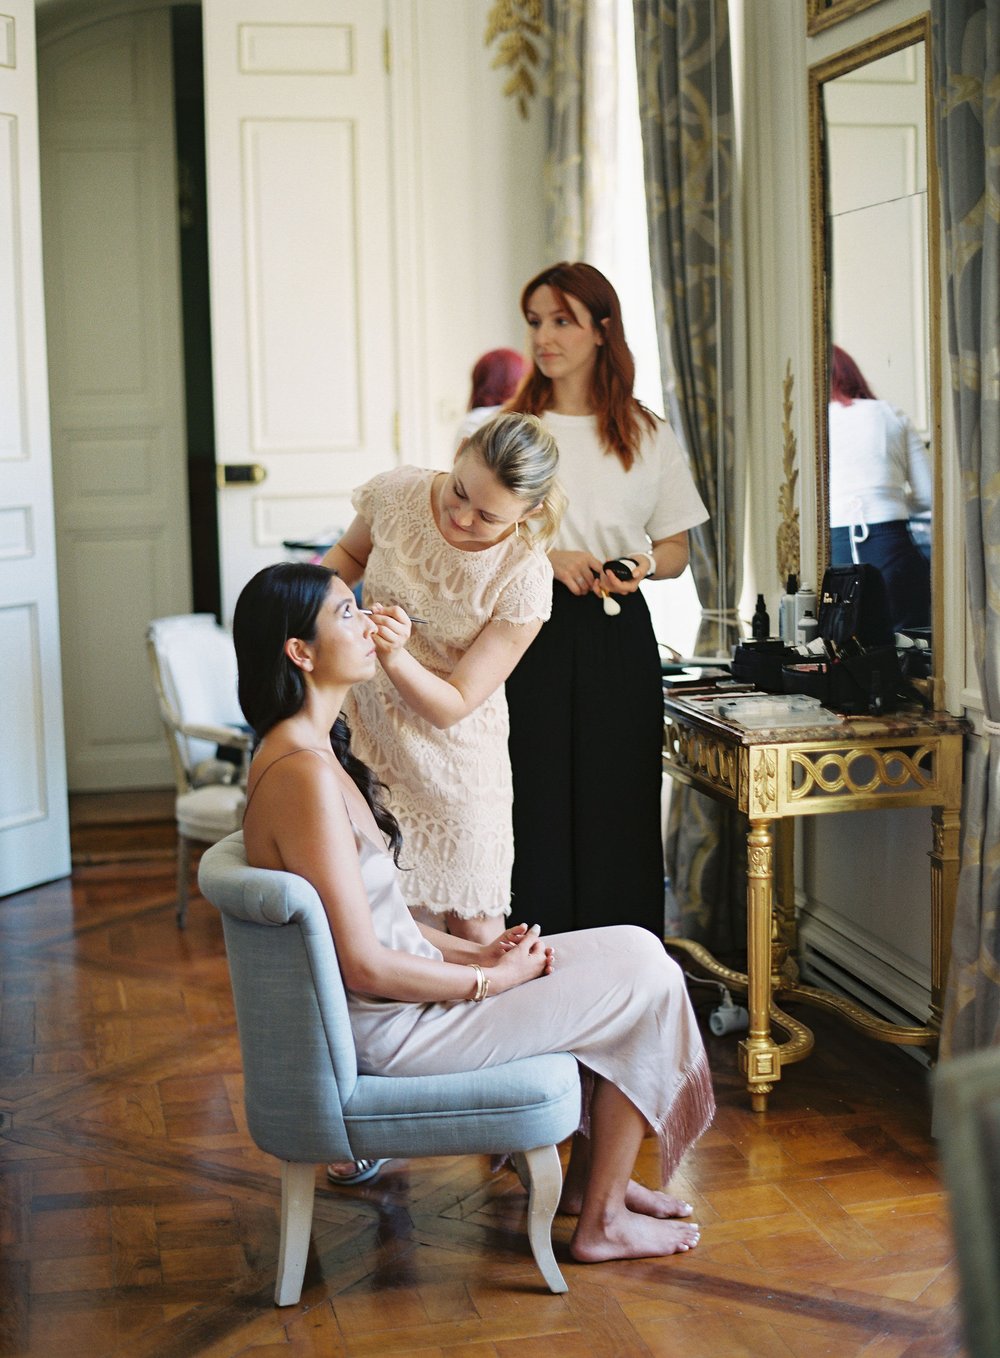 Chateau-de-tourreau-makeup-artist-hair-stylist-onorina-jomir-beauty (5).jpg